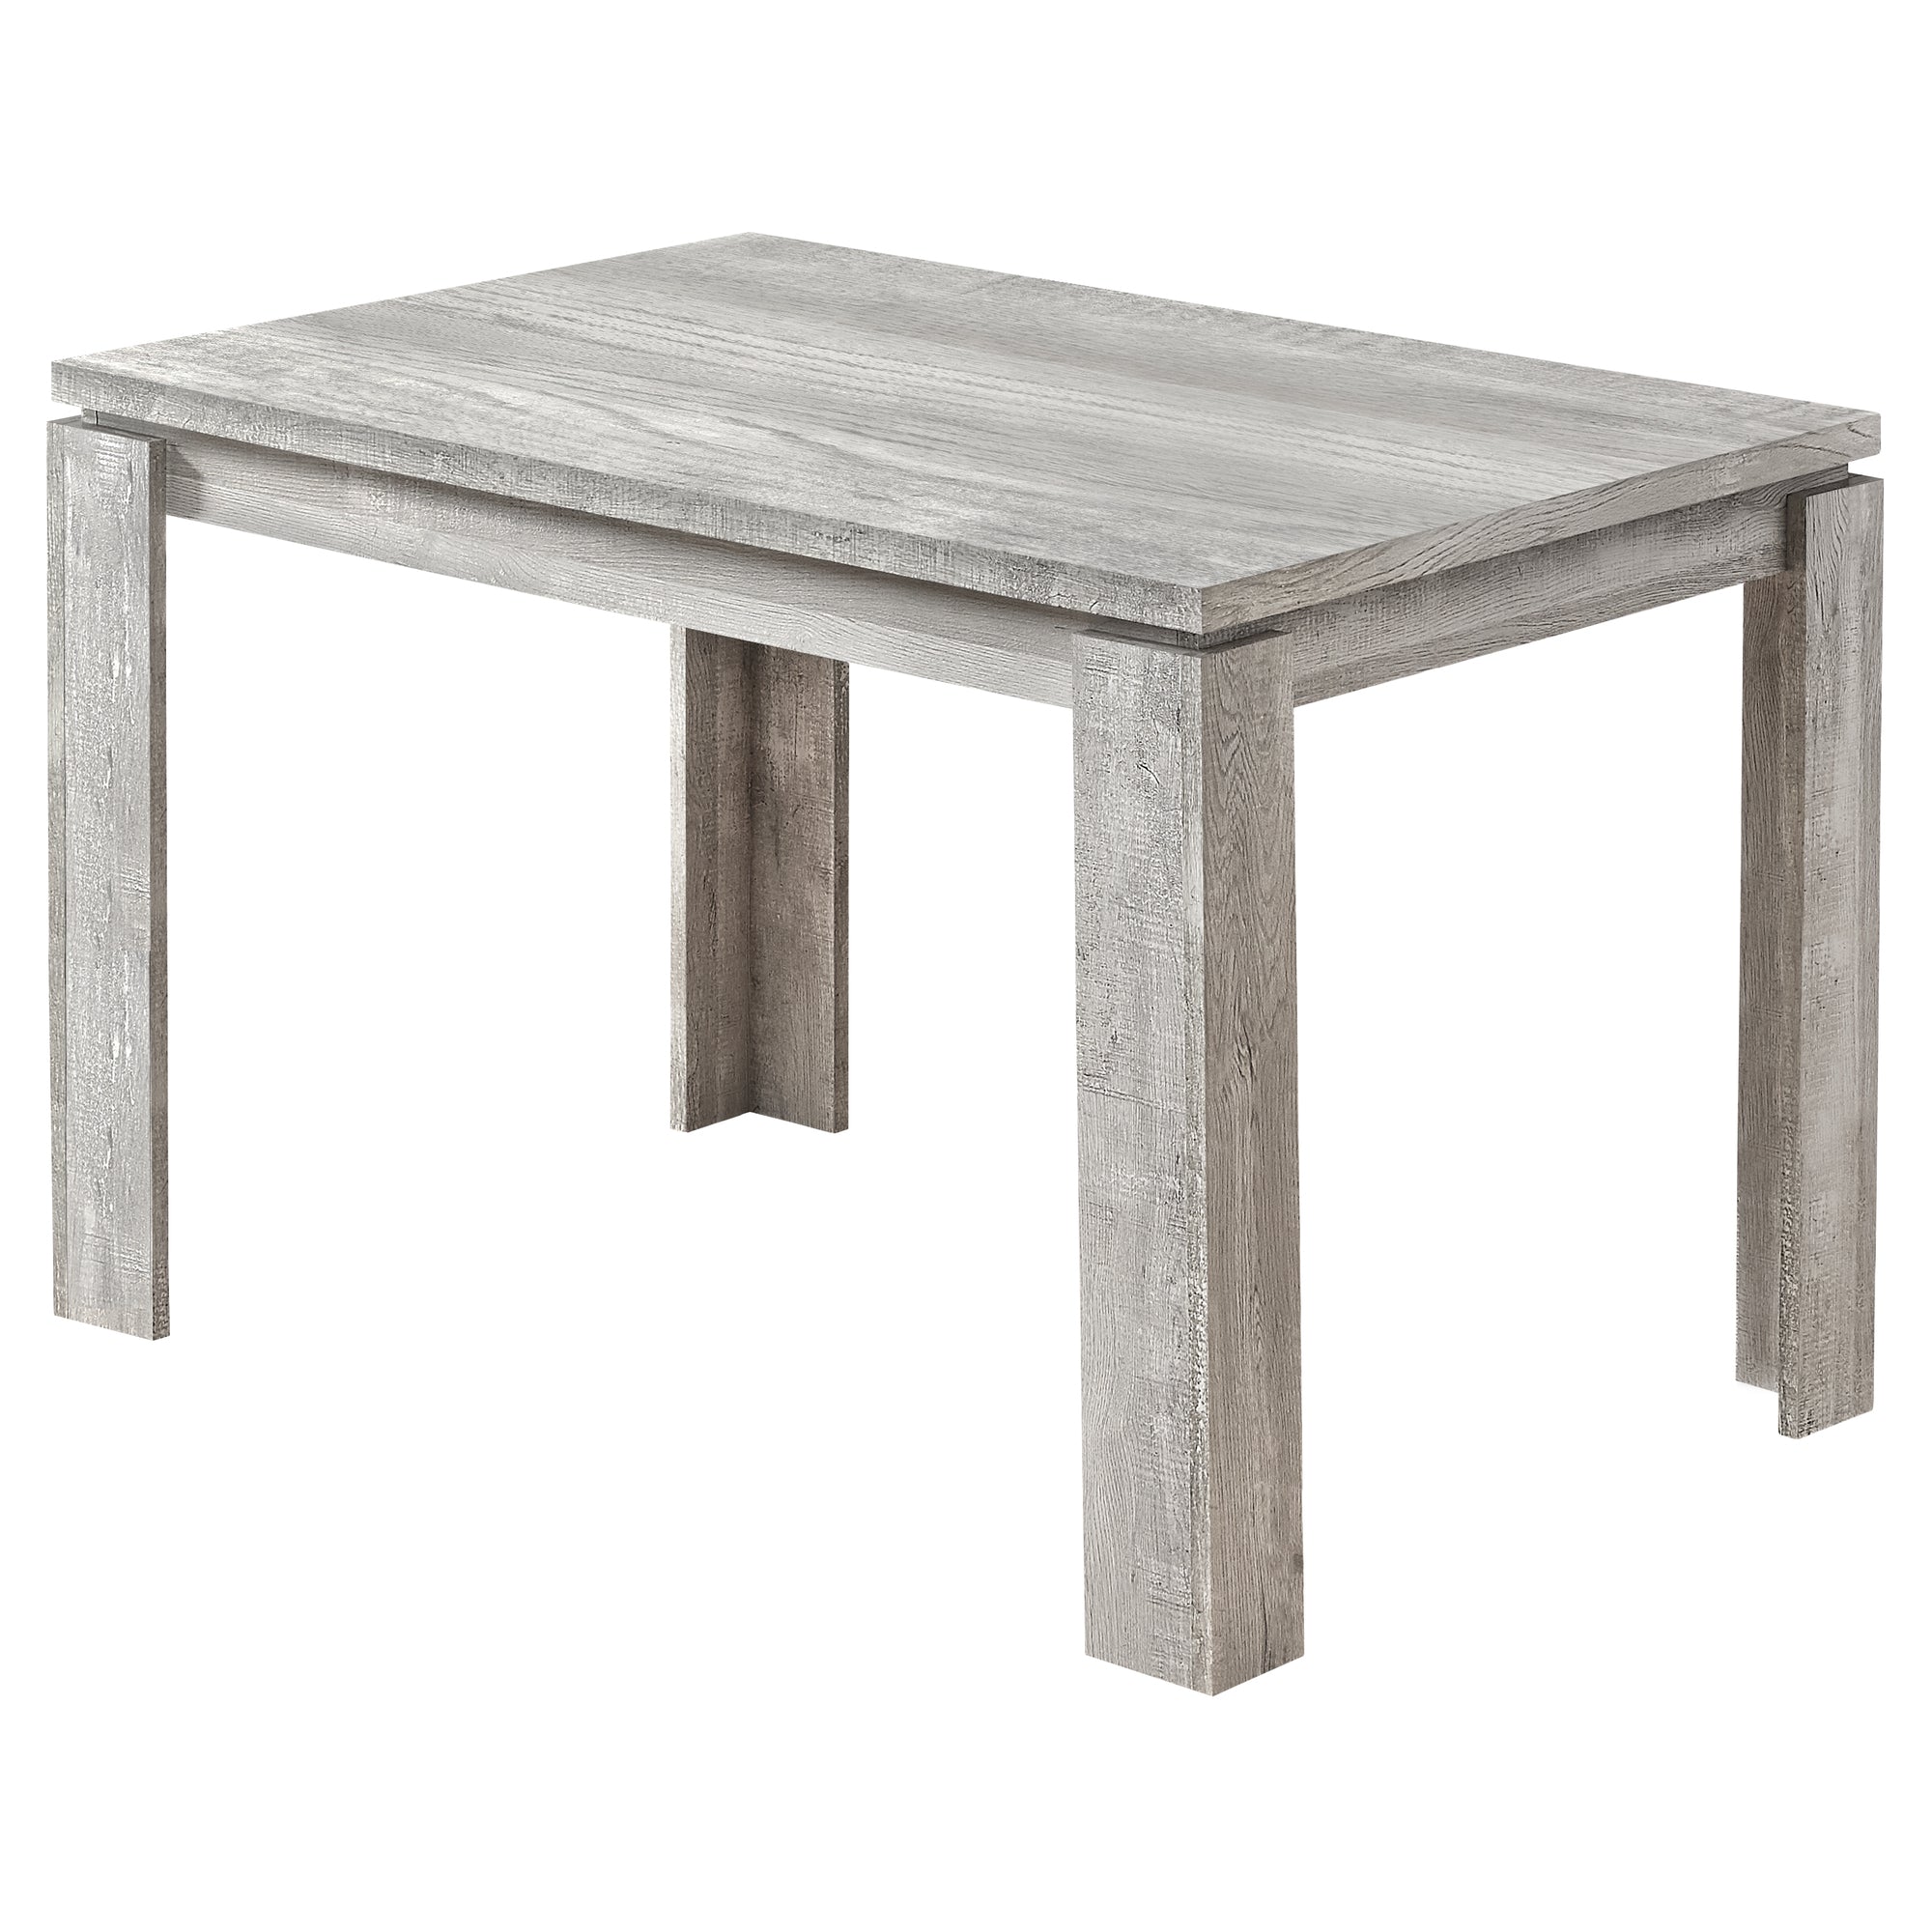 Wooden Heavy-Duty Reclaimed Wood-Look 32" x 48" Dining Table (Grey)